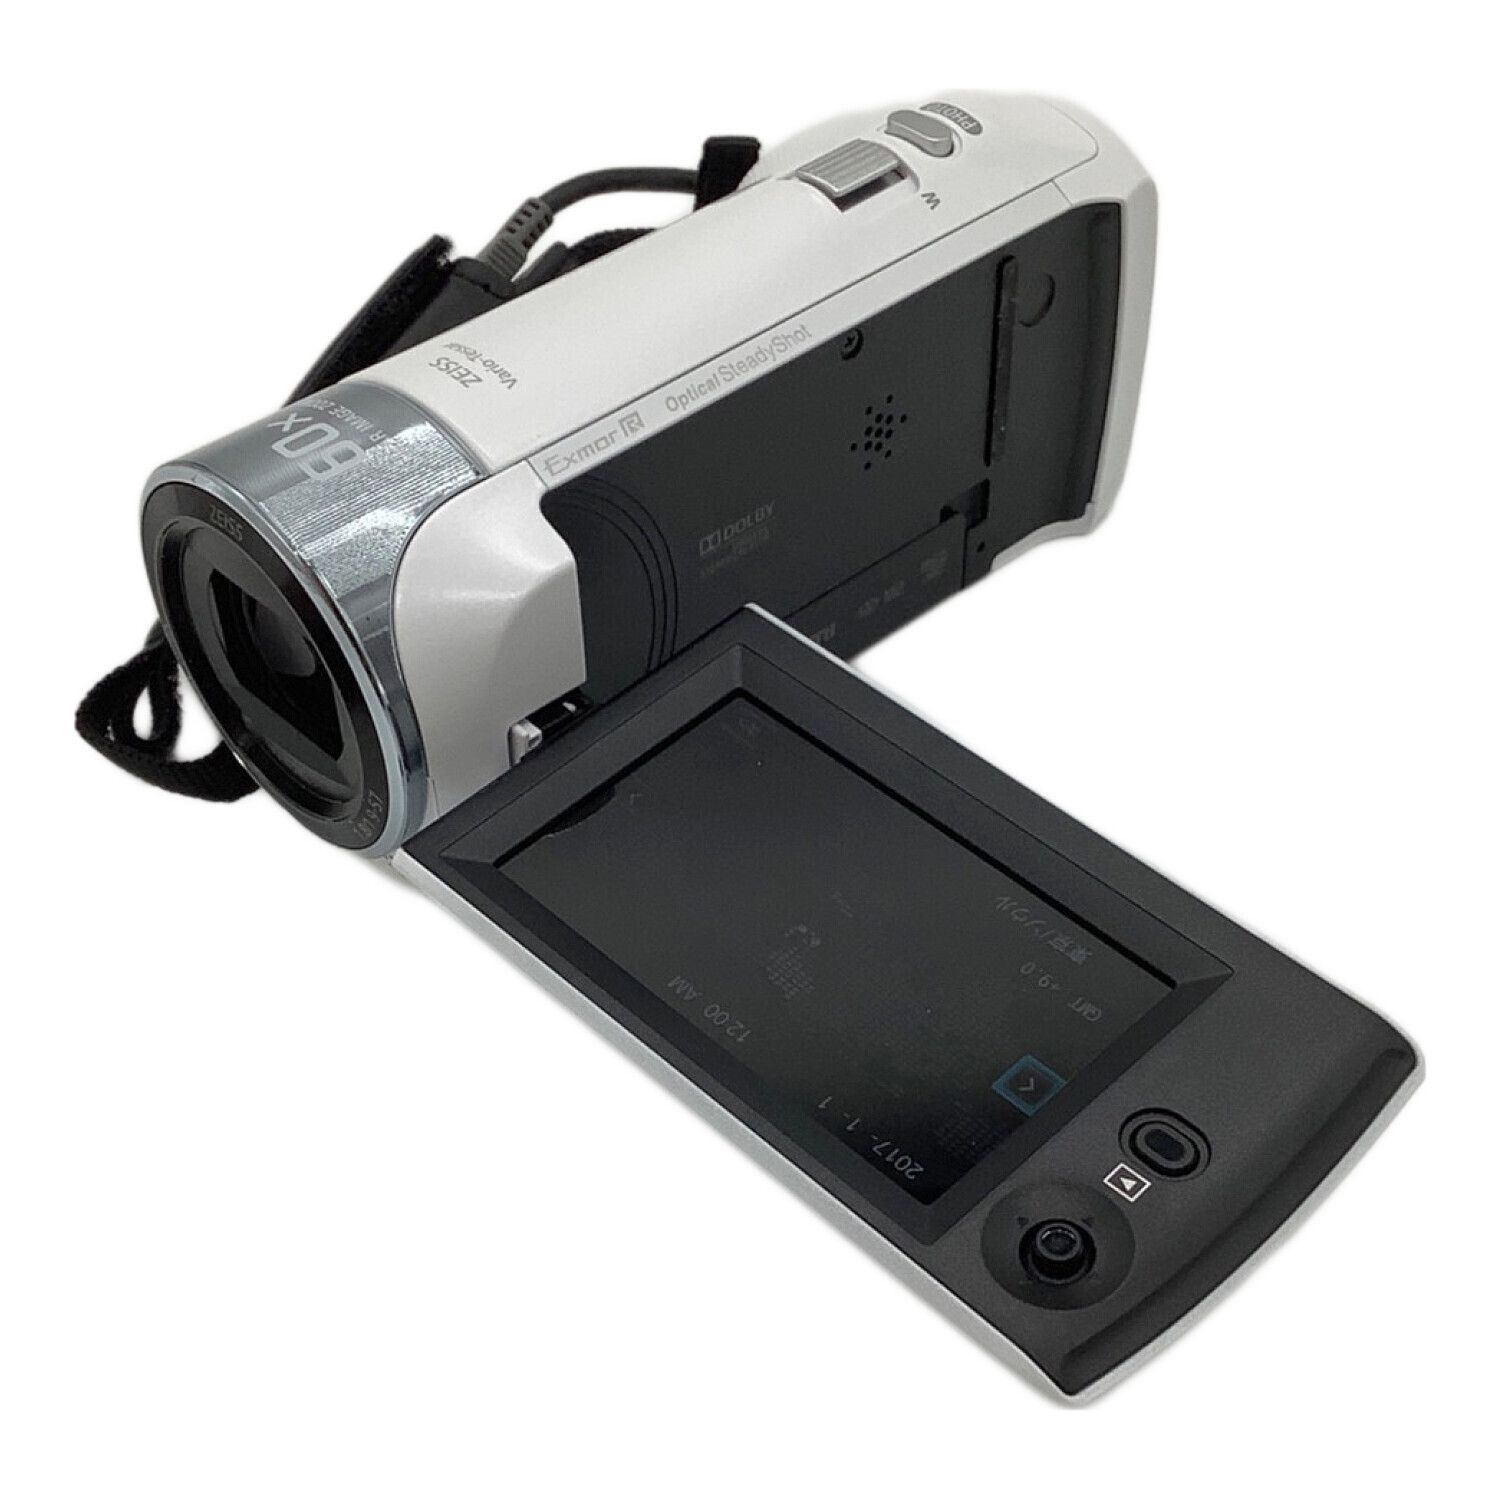 SONY (ソニー) デジタルビデオカメラ 229万画素 microSDカード対応 HDR 